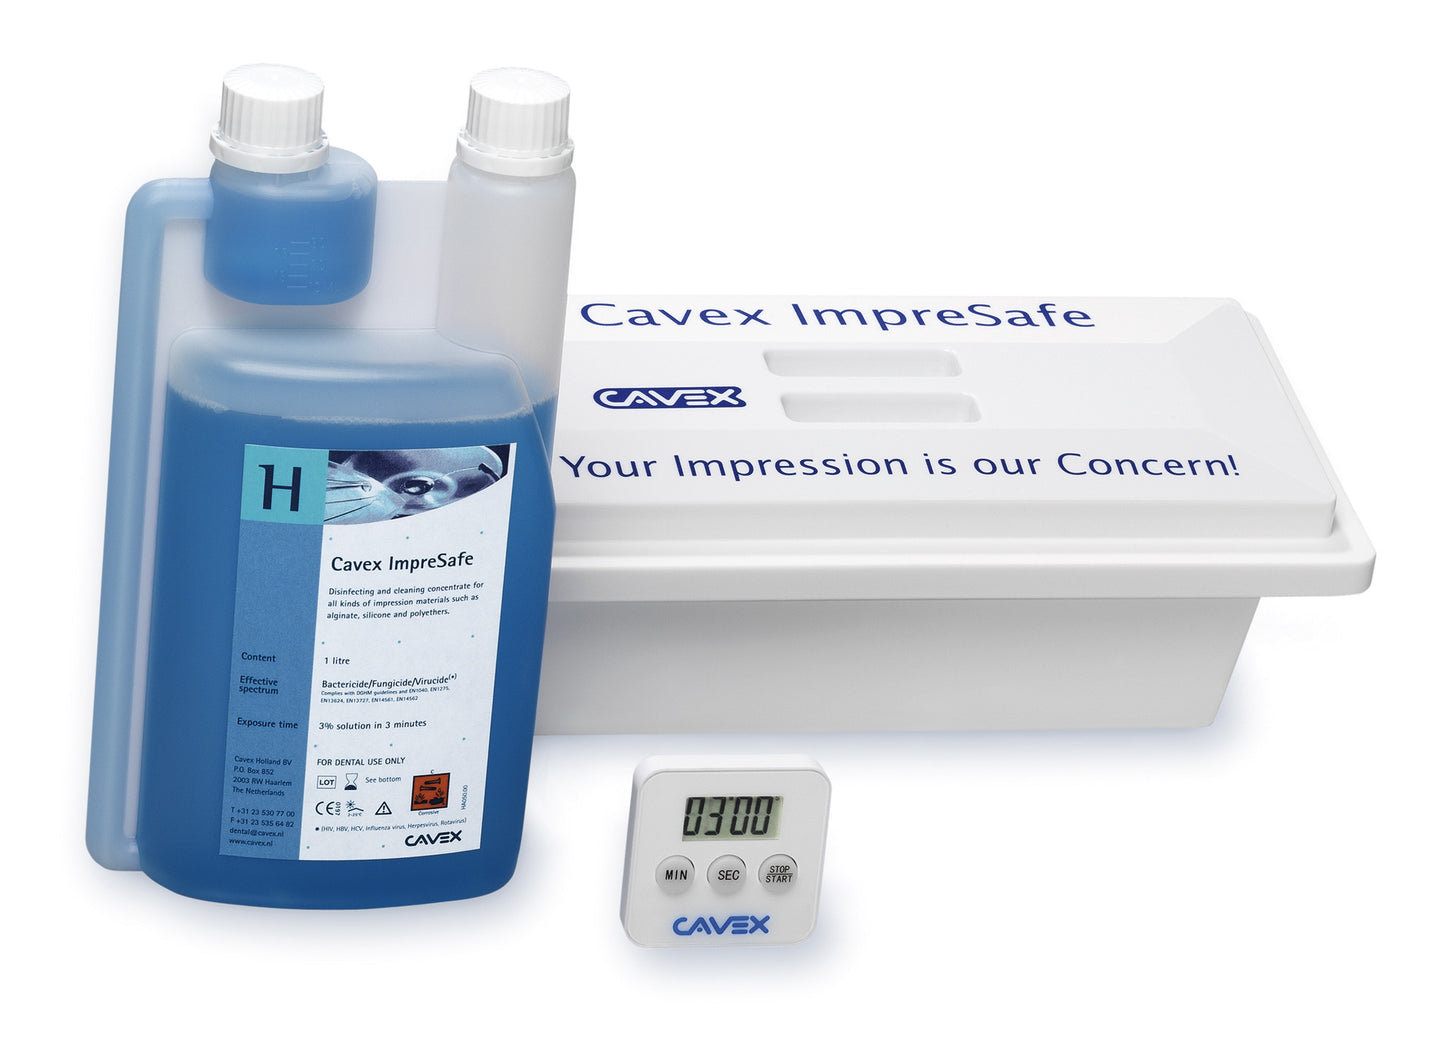 Cavex Impresafe Impression Disinfection System